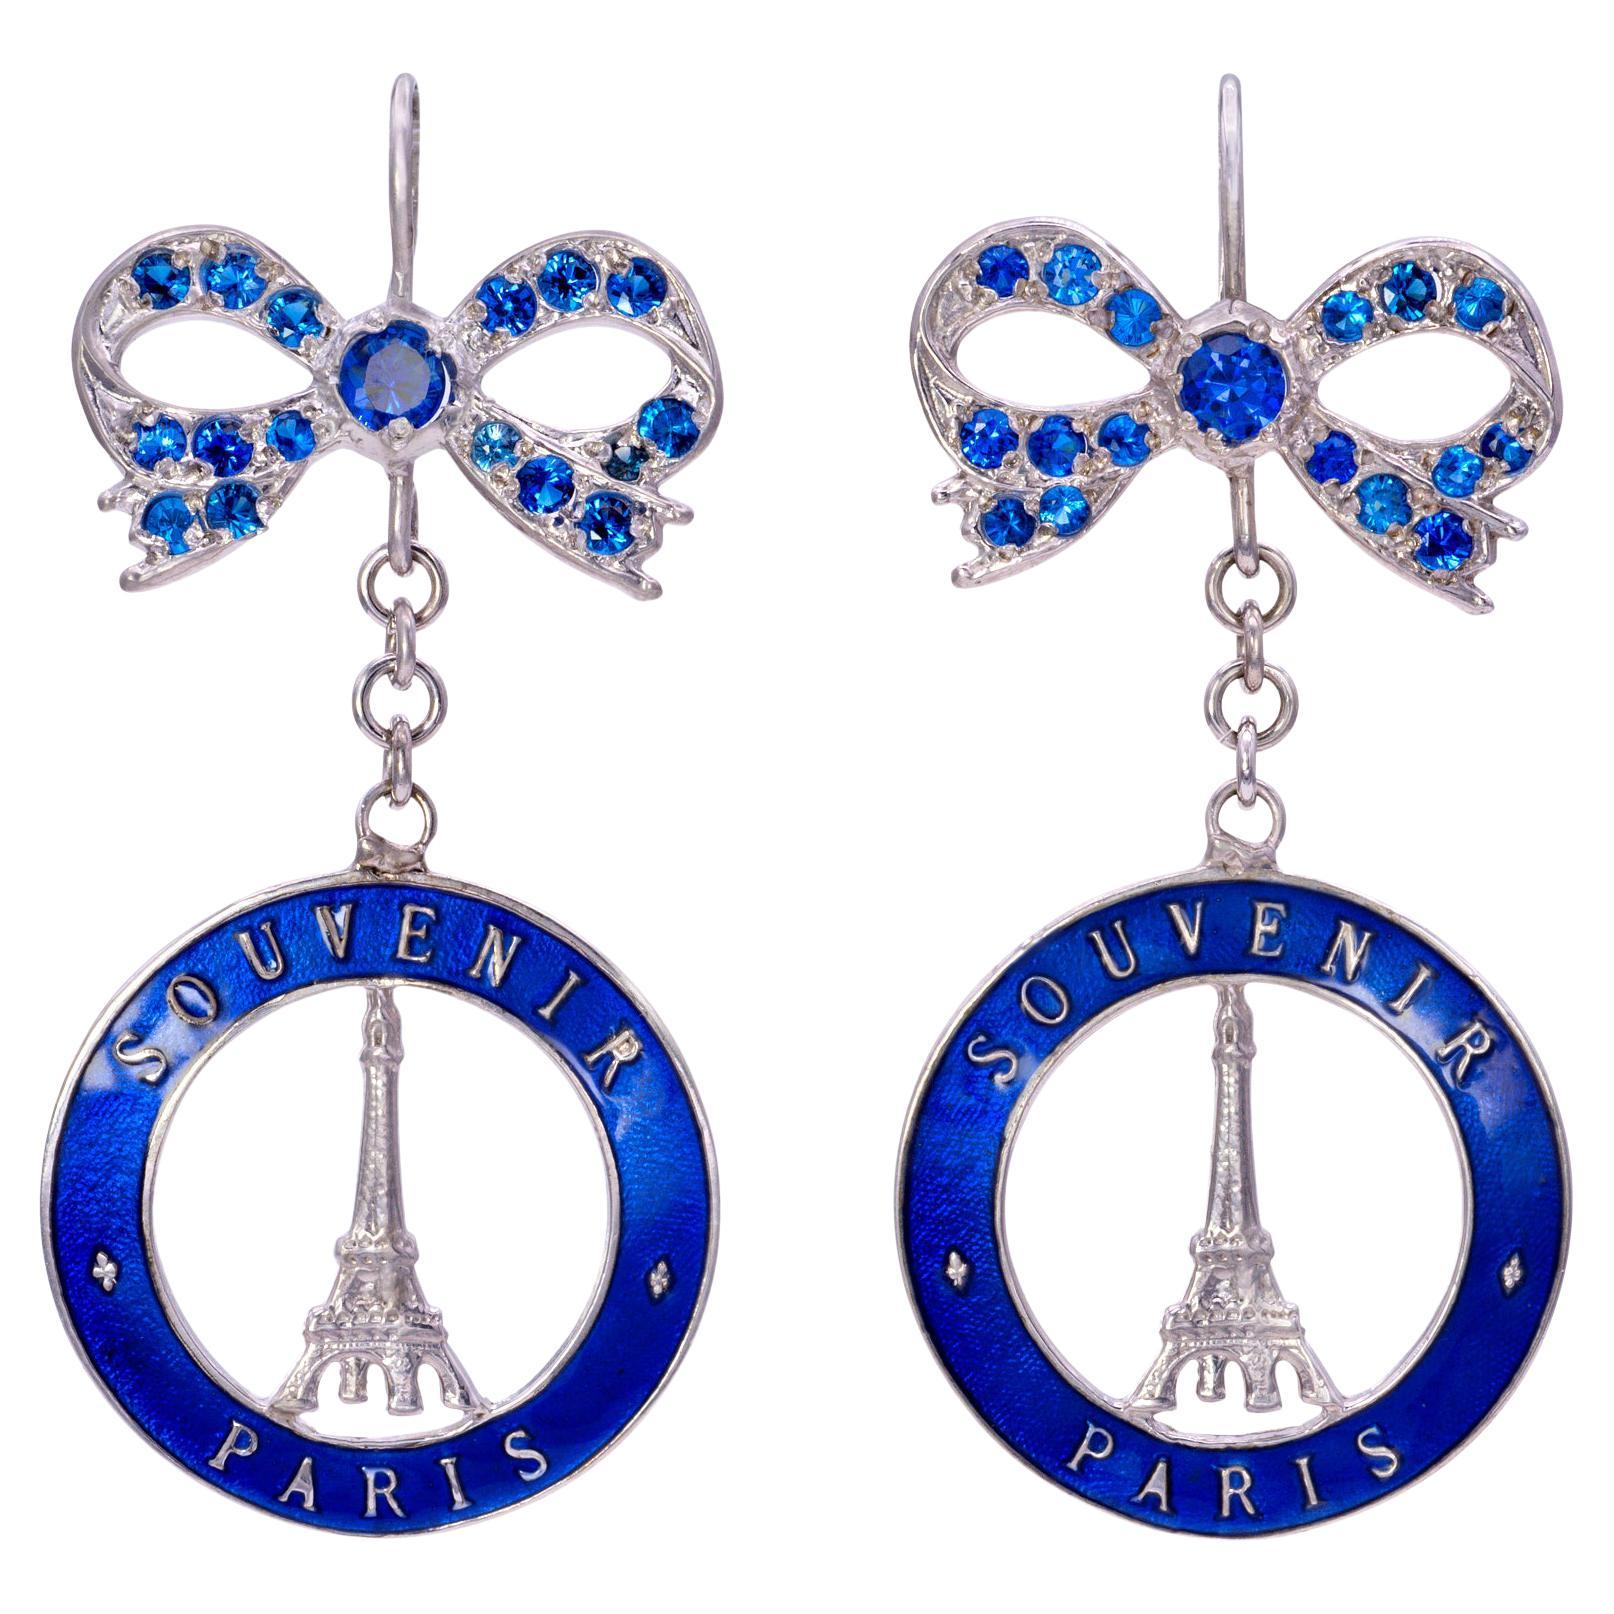 Souvenir de Paris Earrings with Blue Swarovski Crystal bows